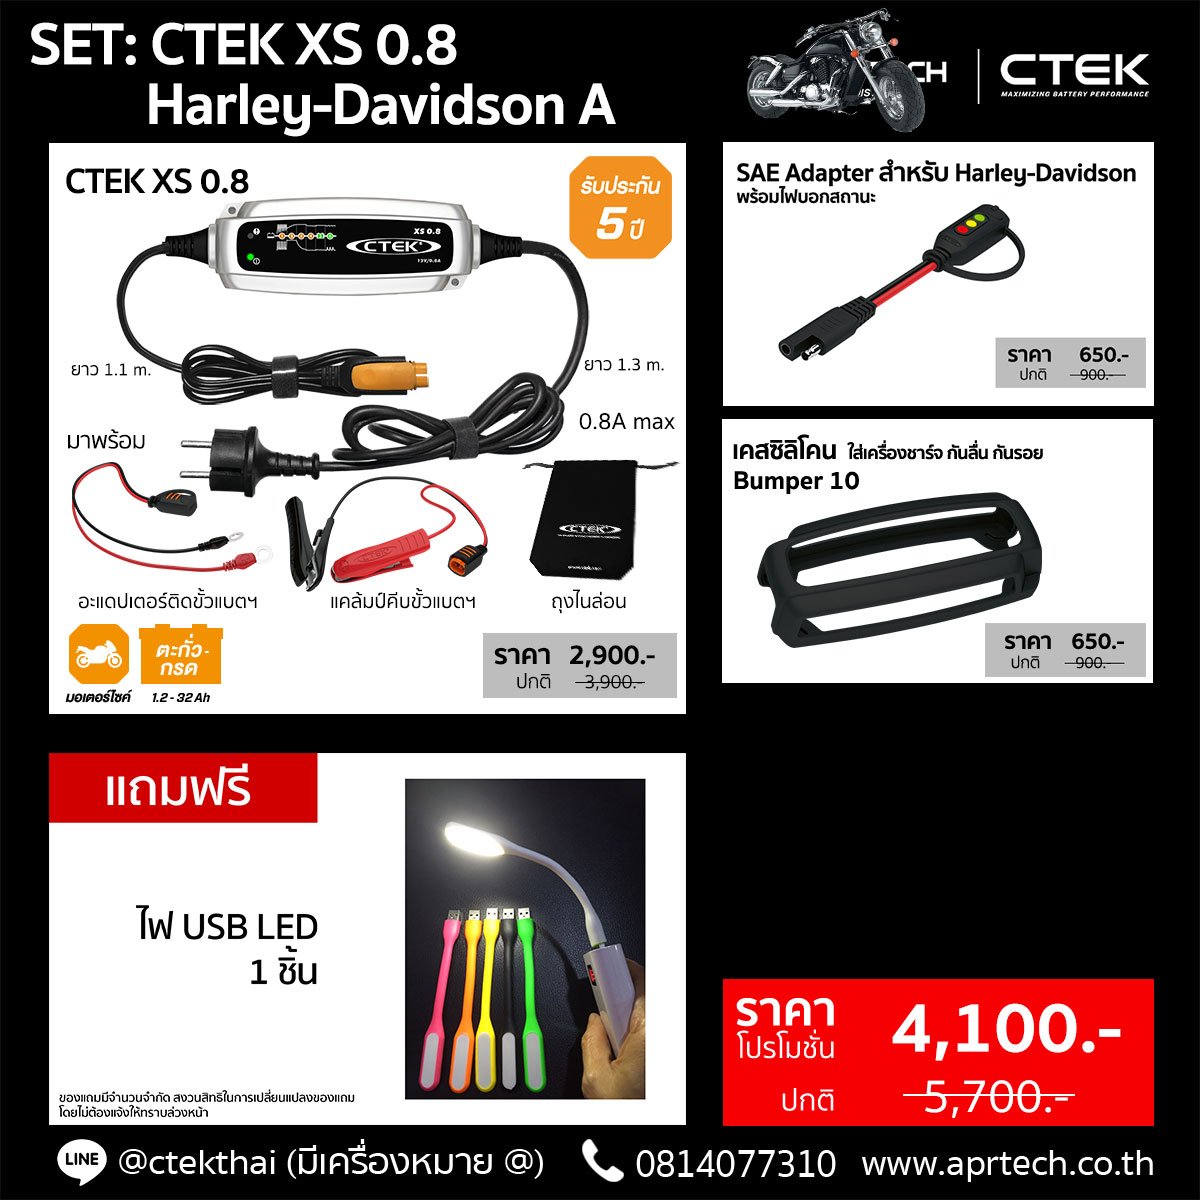 CTEK MXS 0.8 vs MXS 5.0 vs MXS 25 - Which one to buy? 